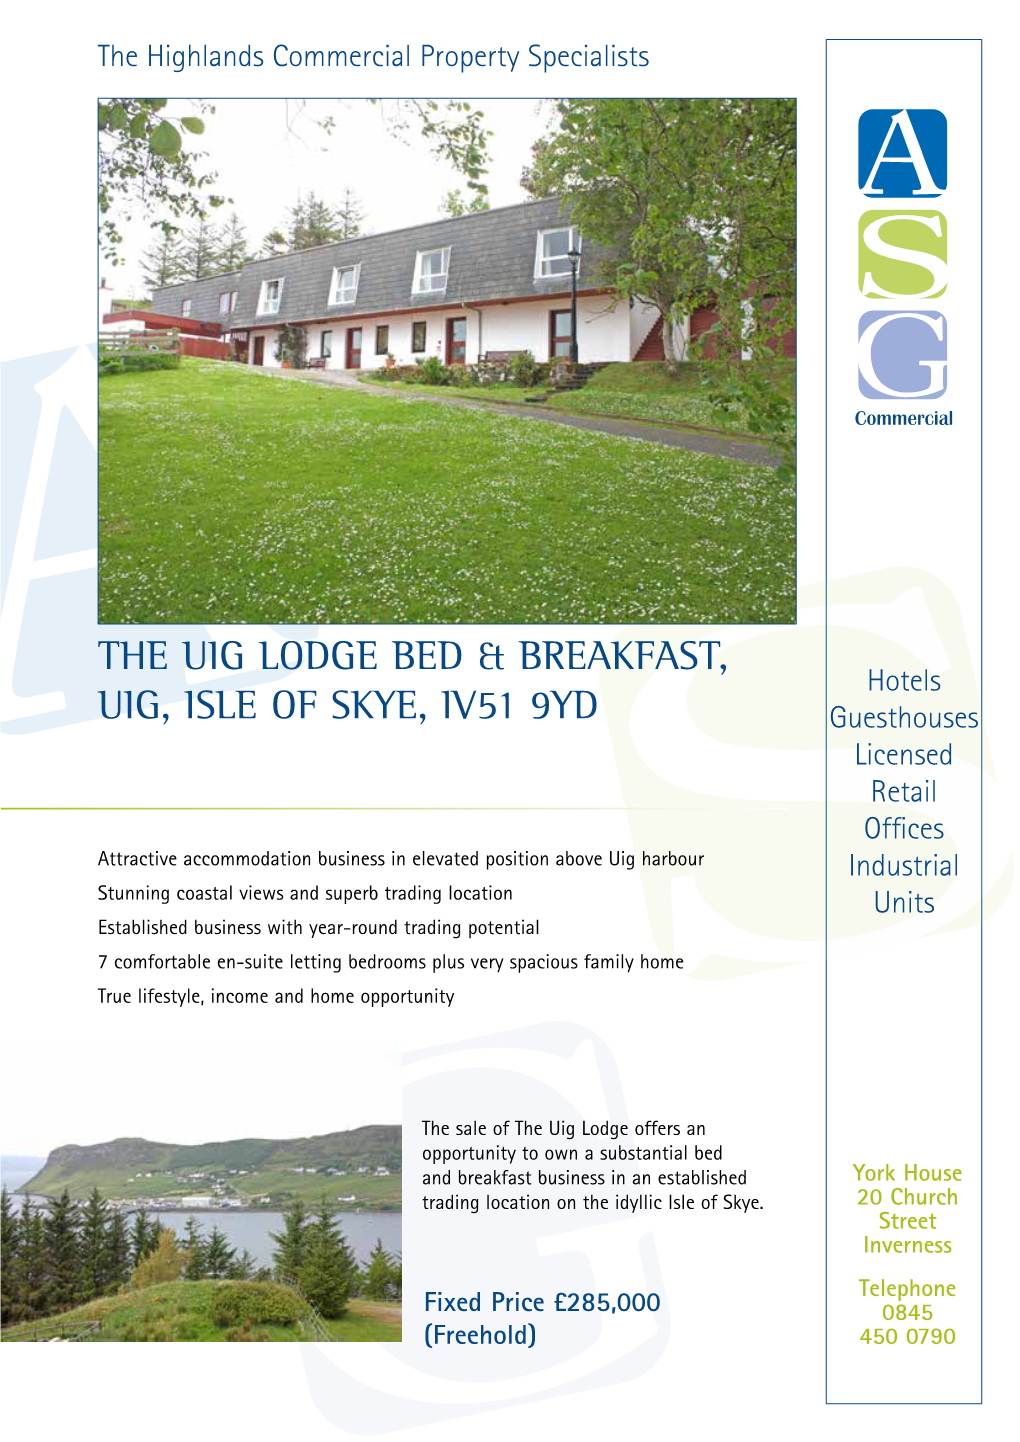 The Uig Lodge Bed & Breakfast, Uig, Isle of Skye, Iv51